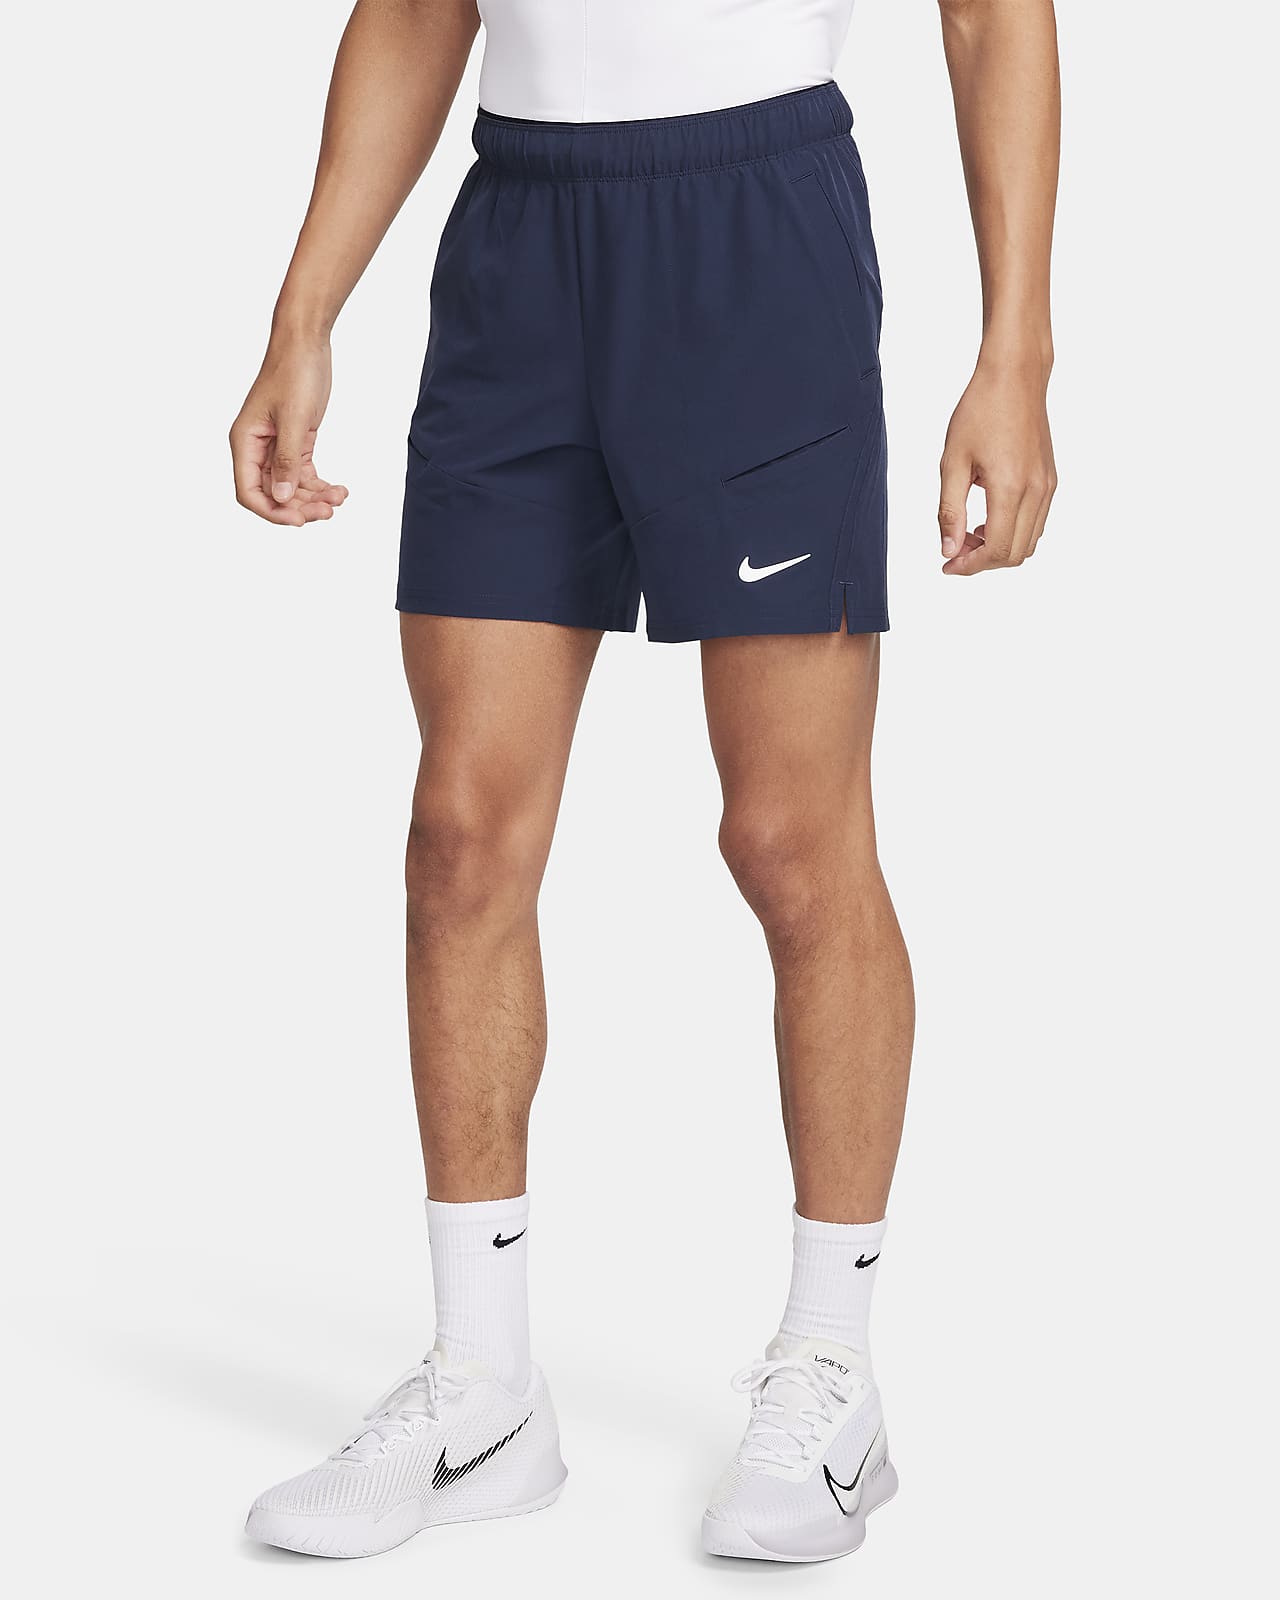 NikeCourt Advantage Dri-FIT tennisshorts voor heren (18 cm)